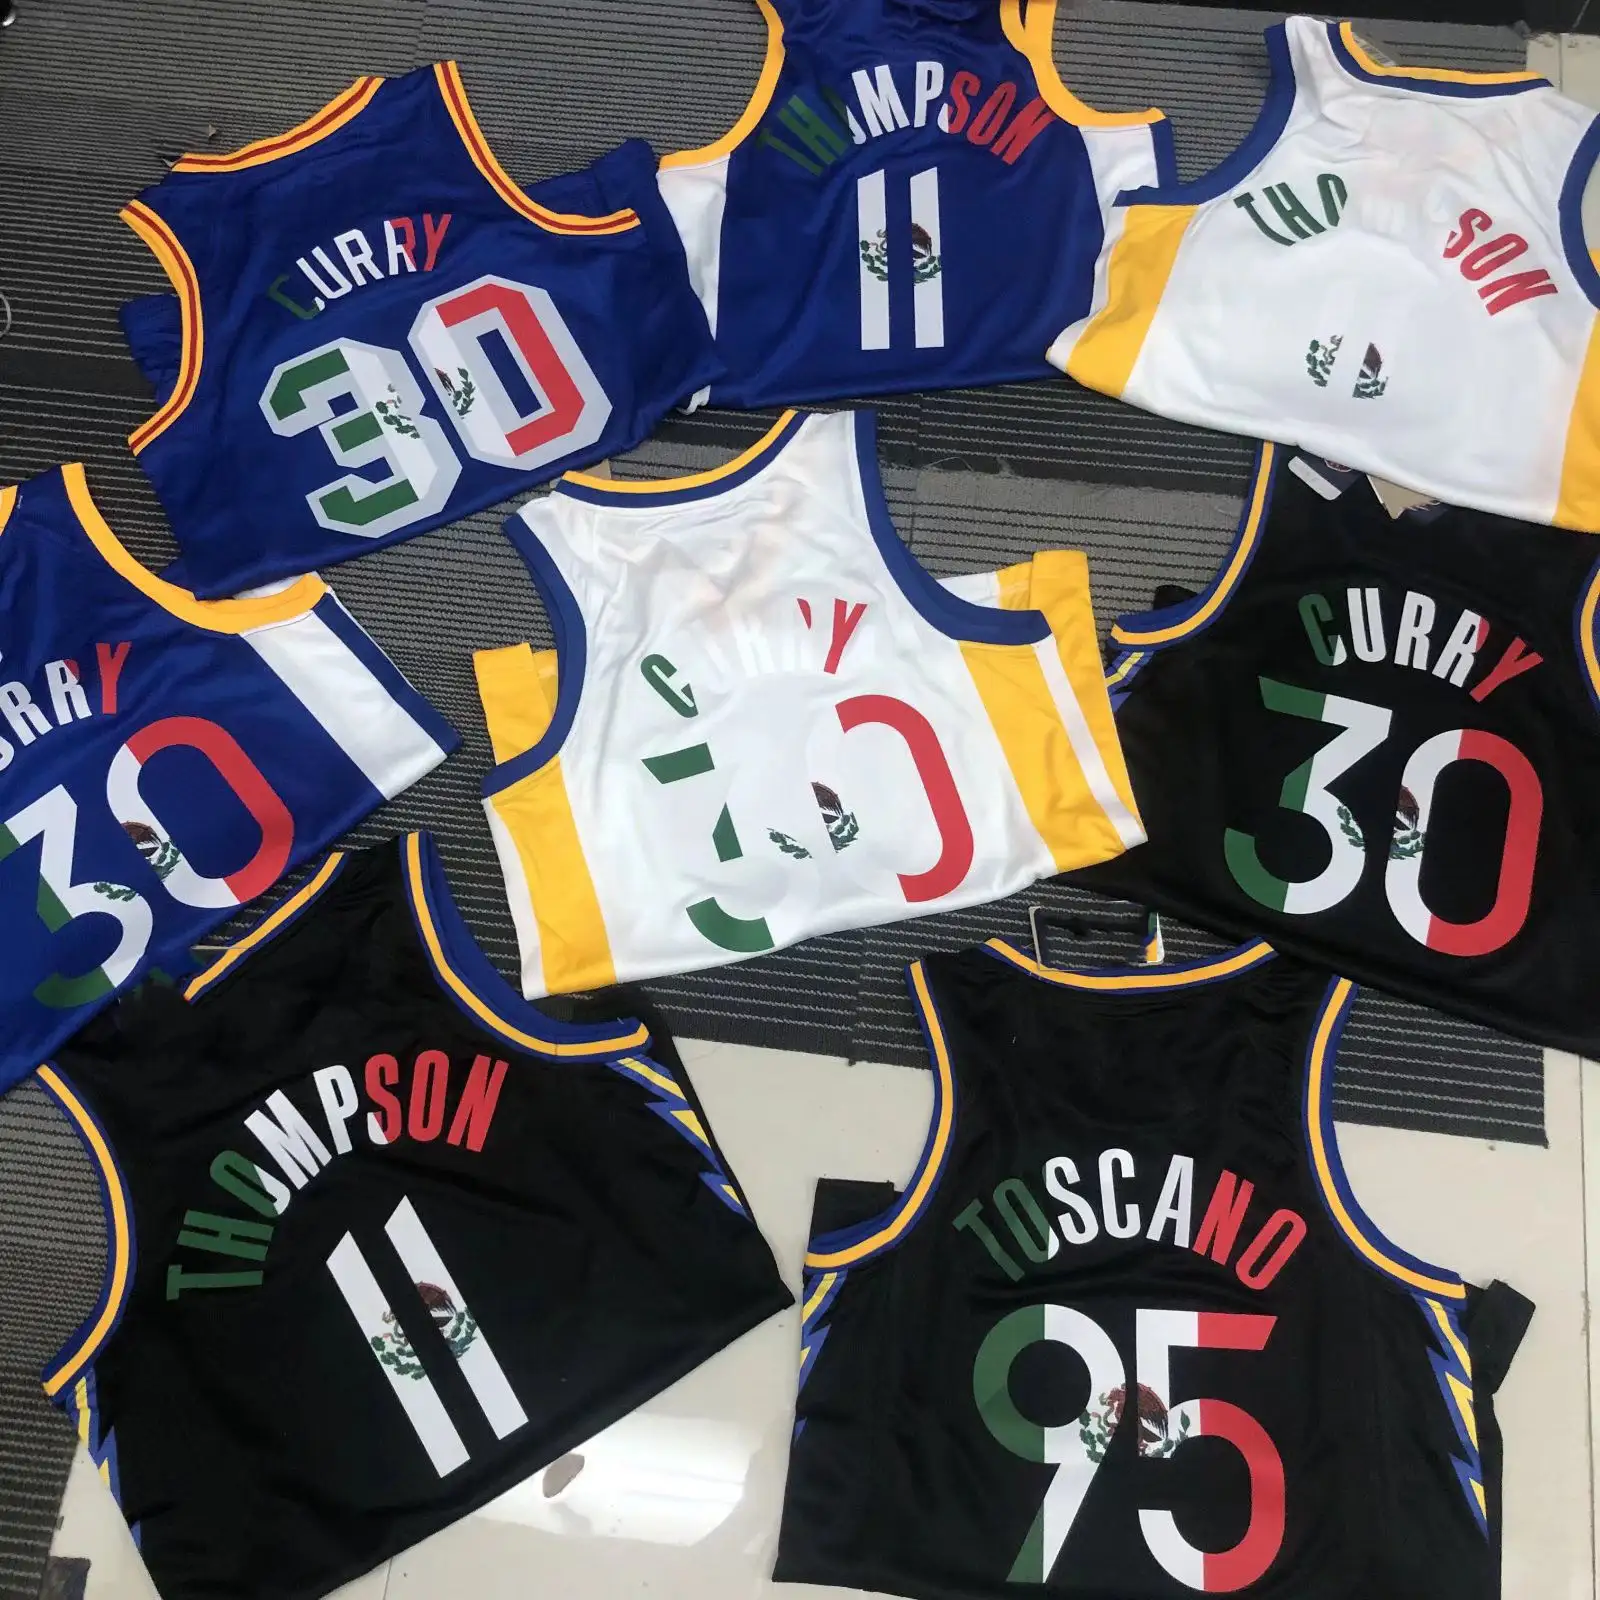 11 Klay Thompson Warrior Shirts Basketbal 95 Toscano Sport Jersey Curry Mexico Editie Uniform Groothandel